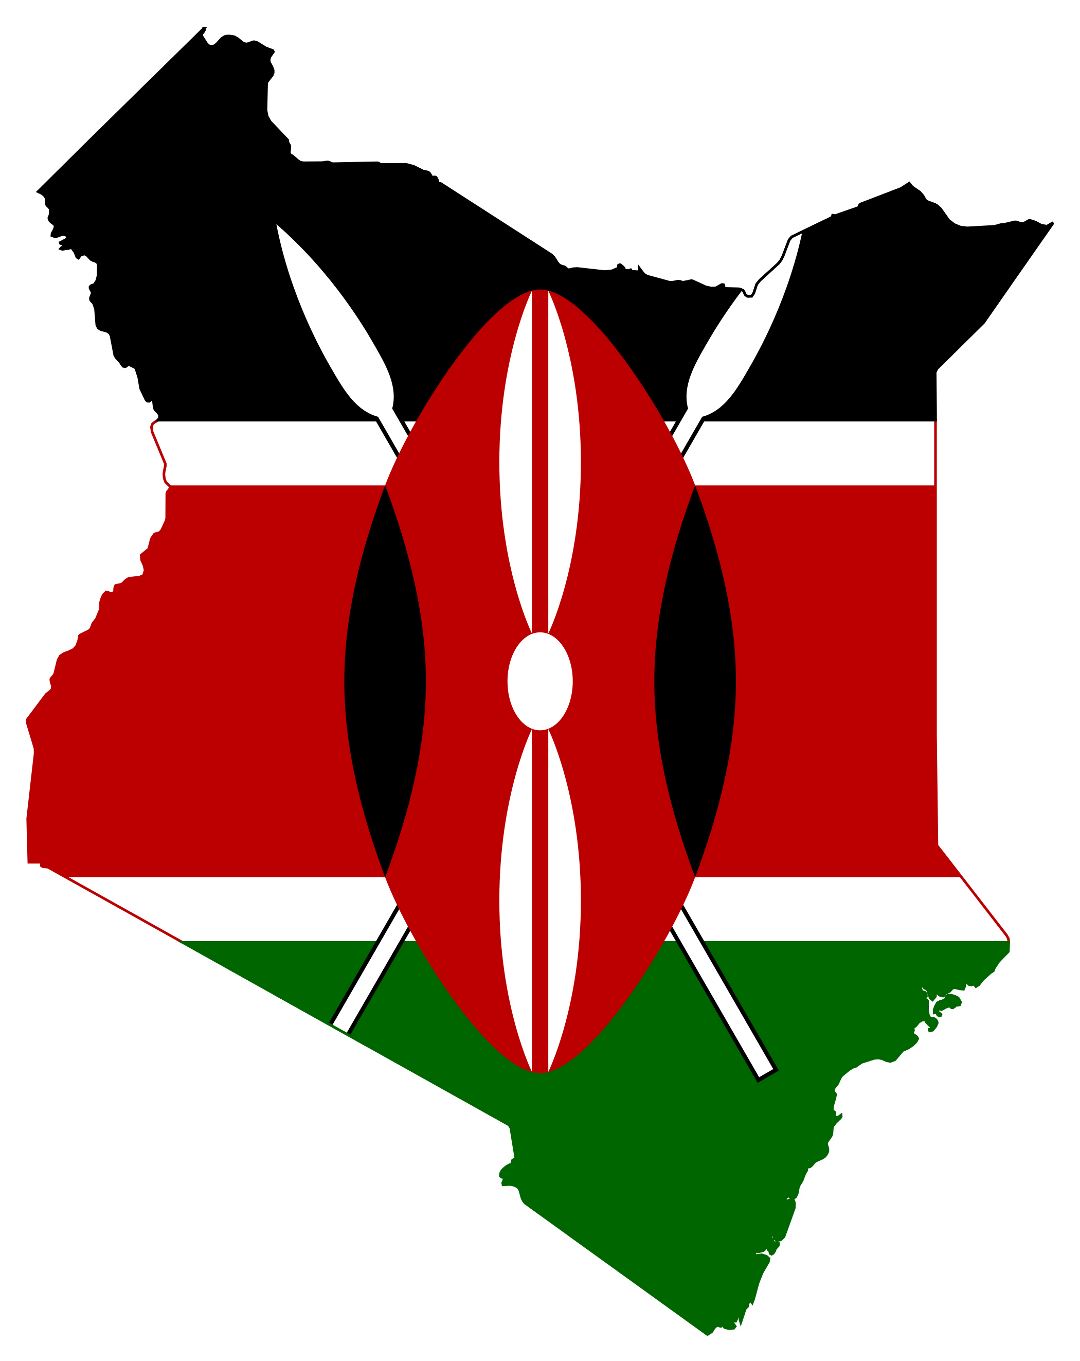 Large flag map of Kenya